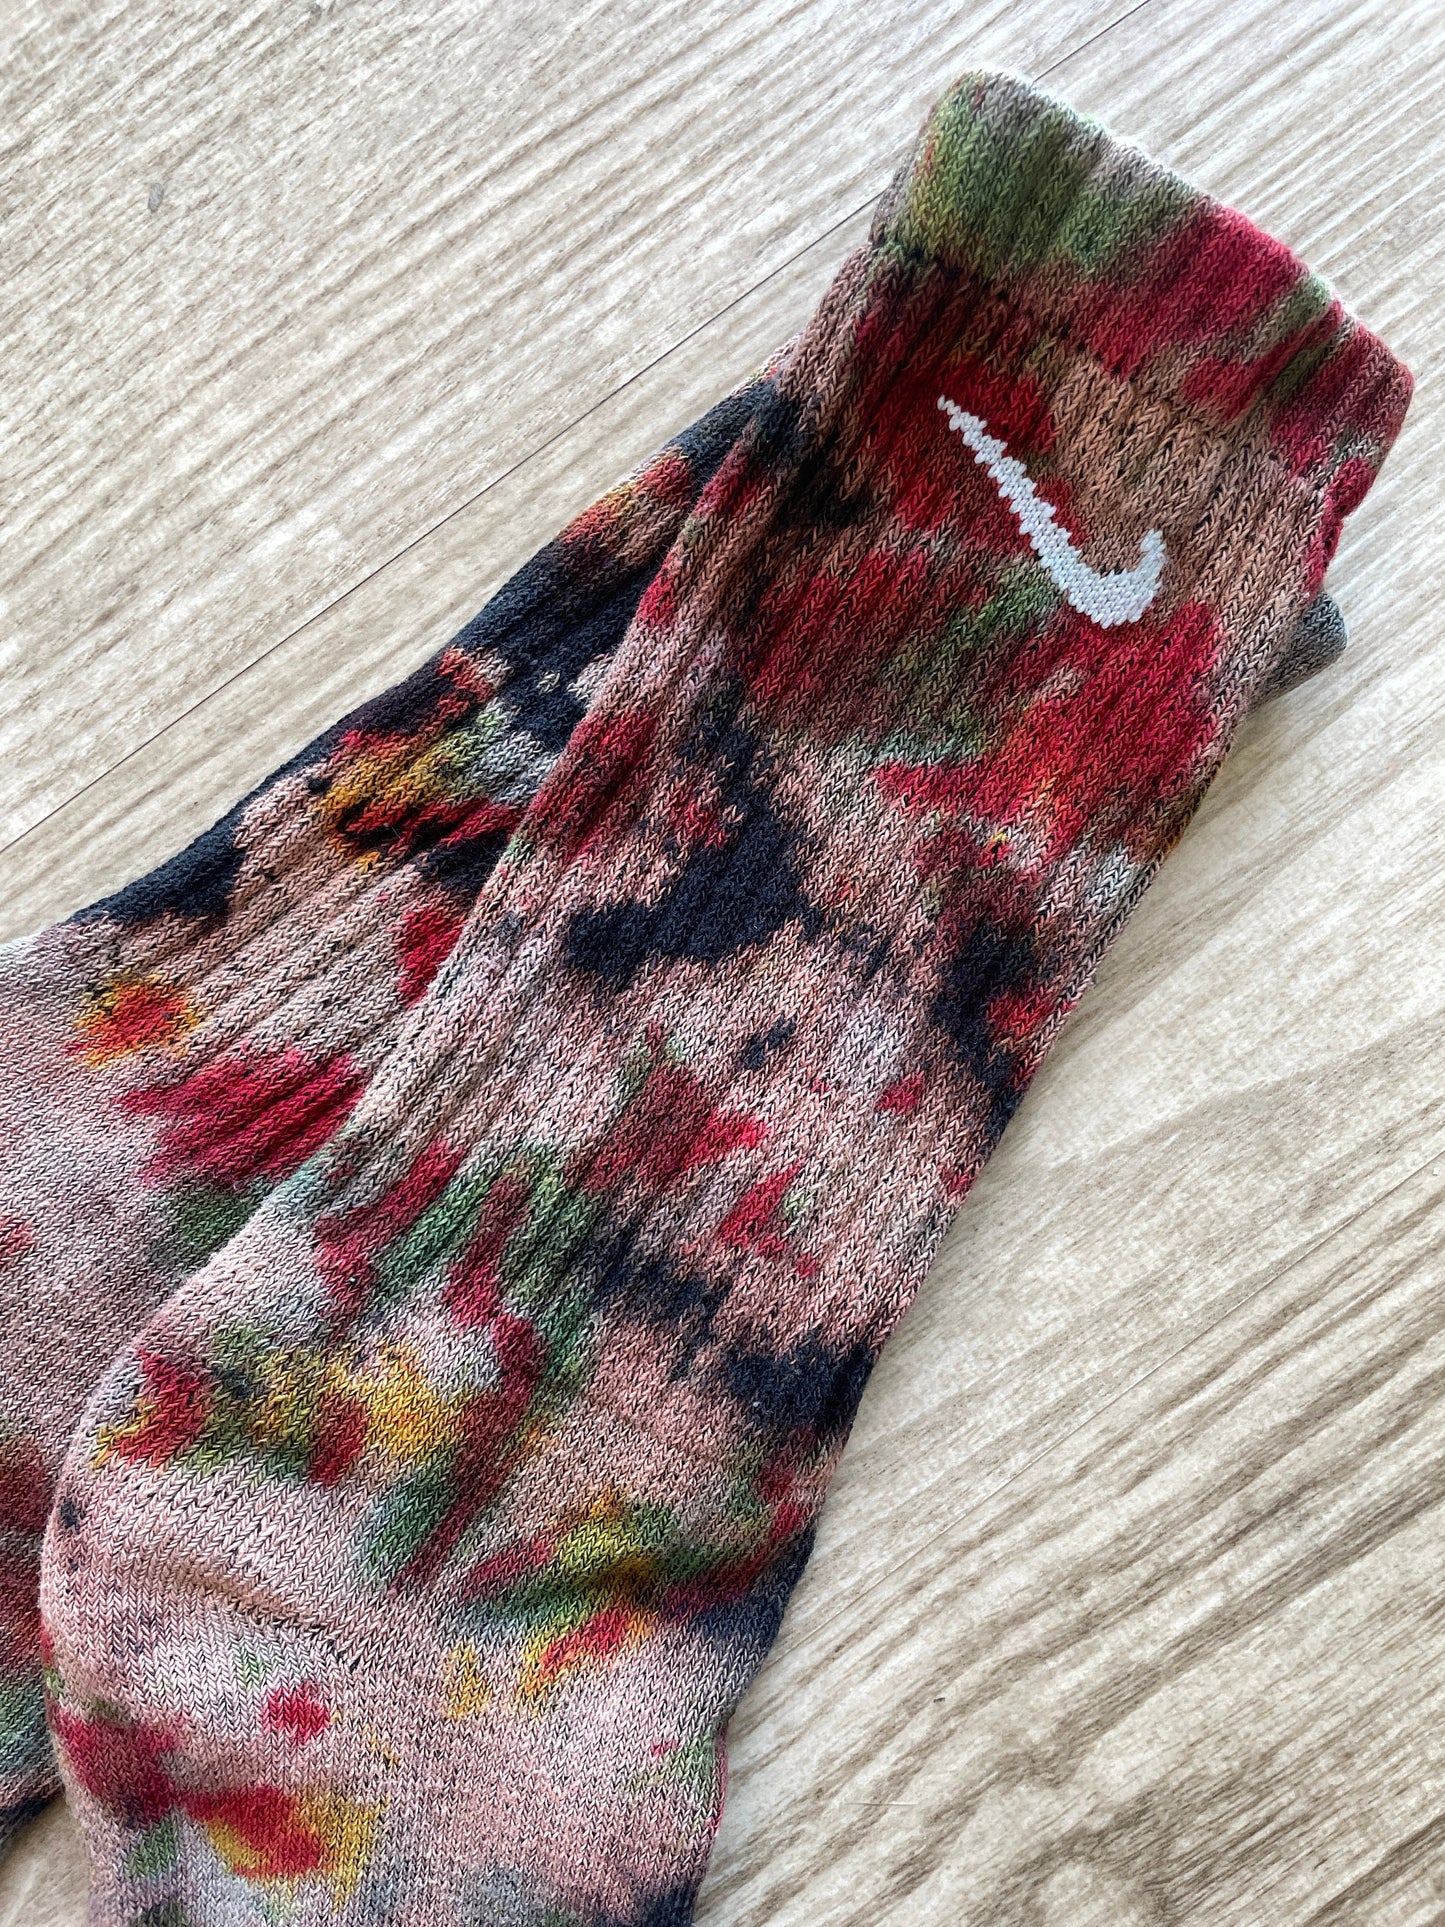 NIKE Socks Hand Dyed Black, Red, and Green Tie Dye Nike Dri-FIT Everyday Cushioned Crew Socks - Size Medium (Men's 6-8/Women's 7-10)